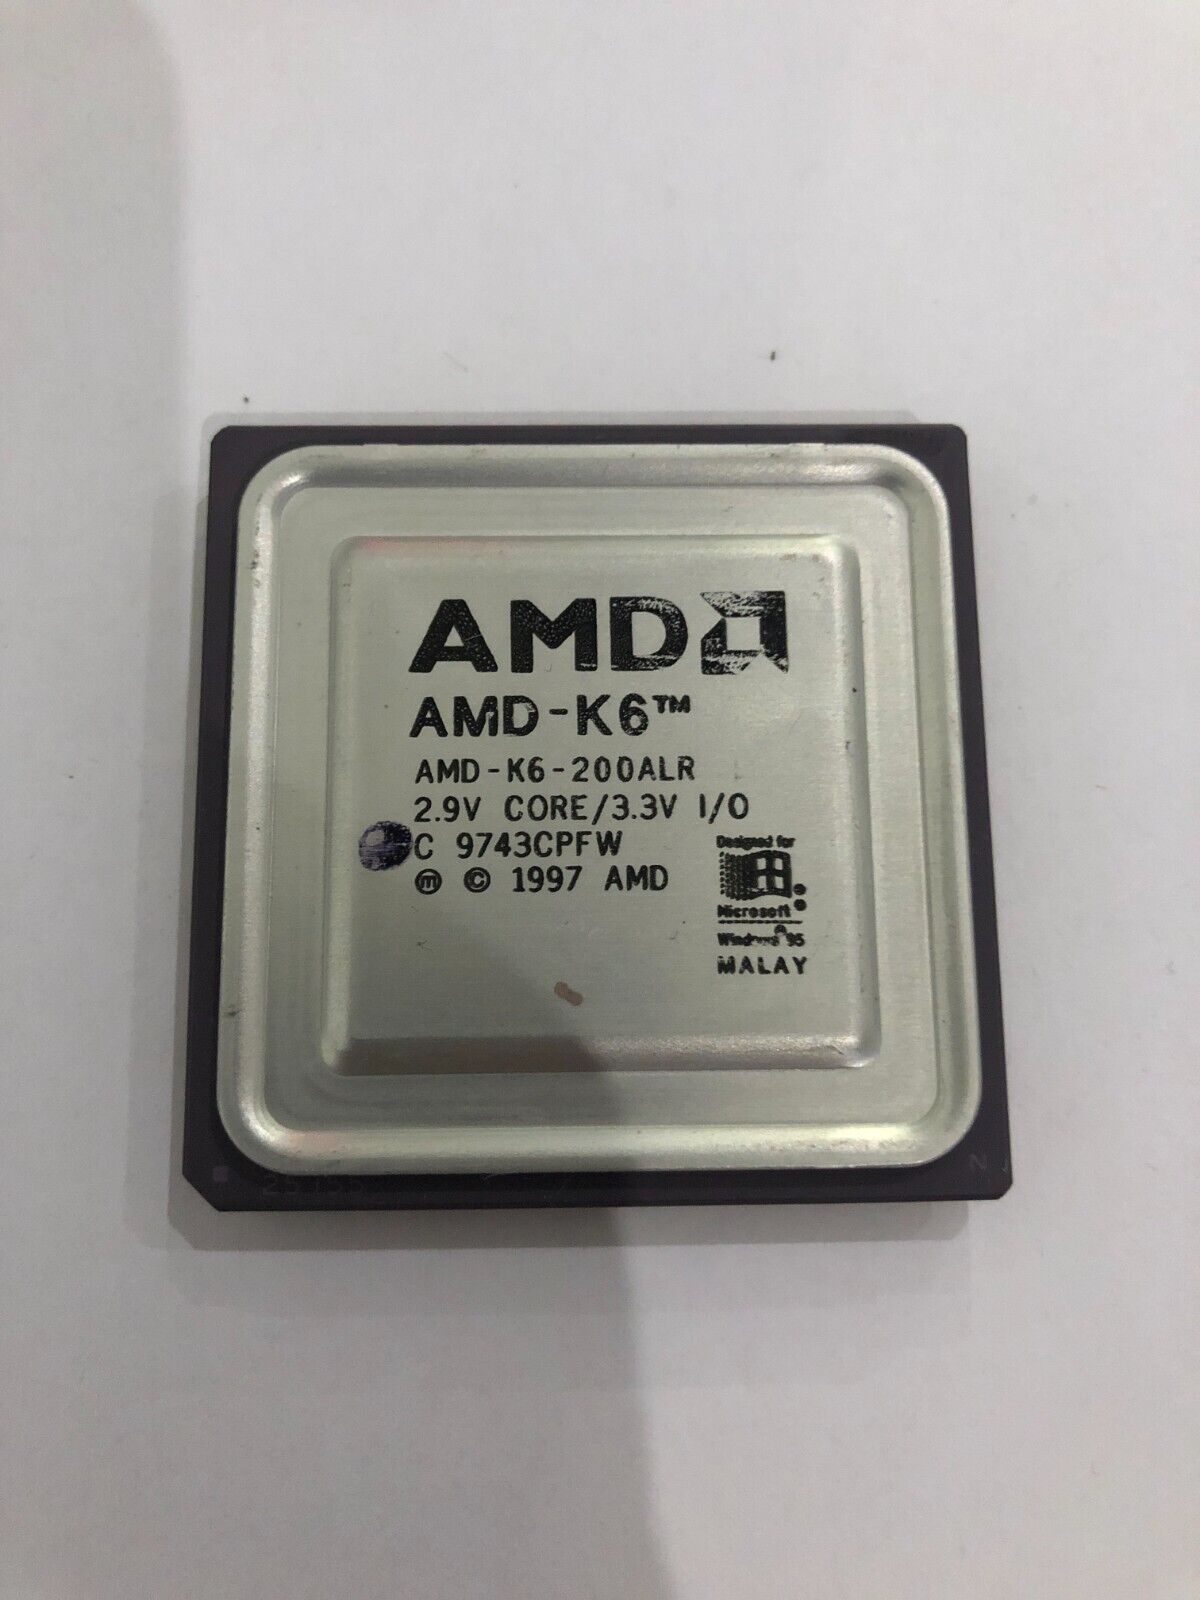 1x AMD AMD-K6-200ALR 200MHZ CPU PROCESSOR AMD-K6 2.9V